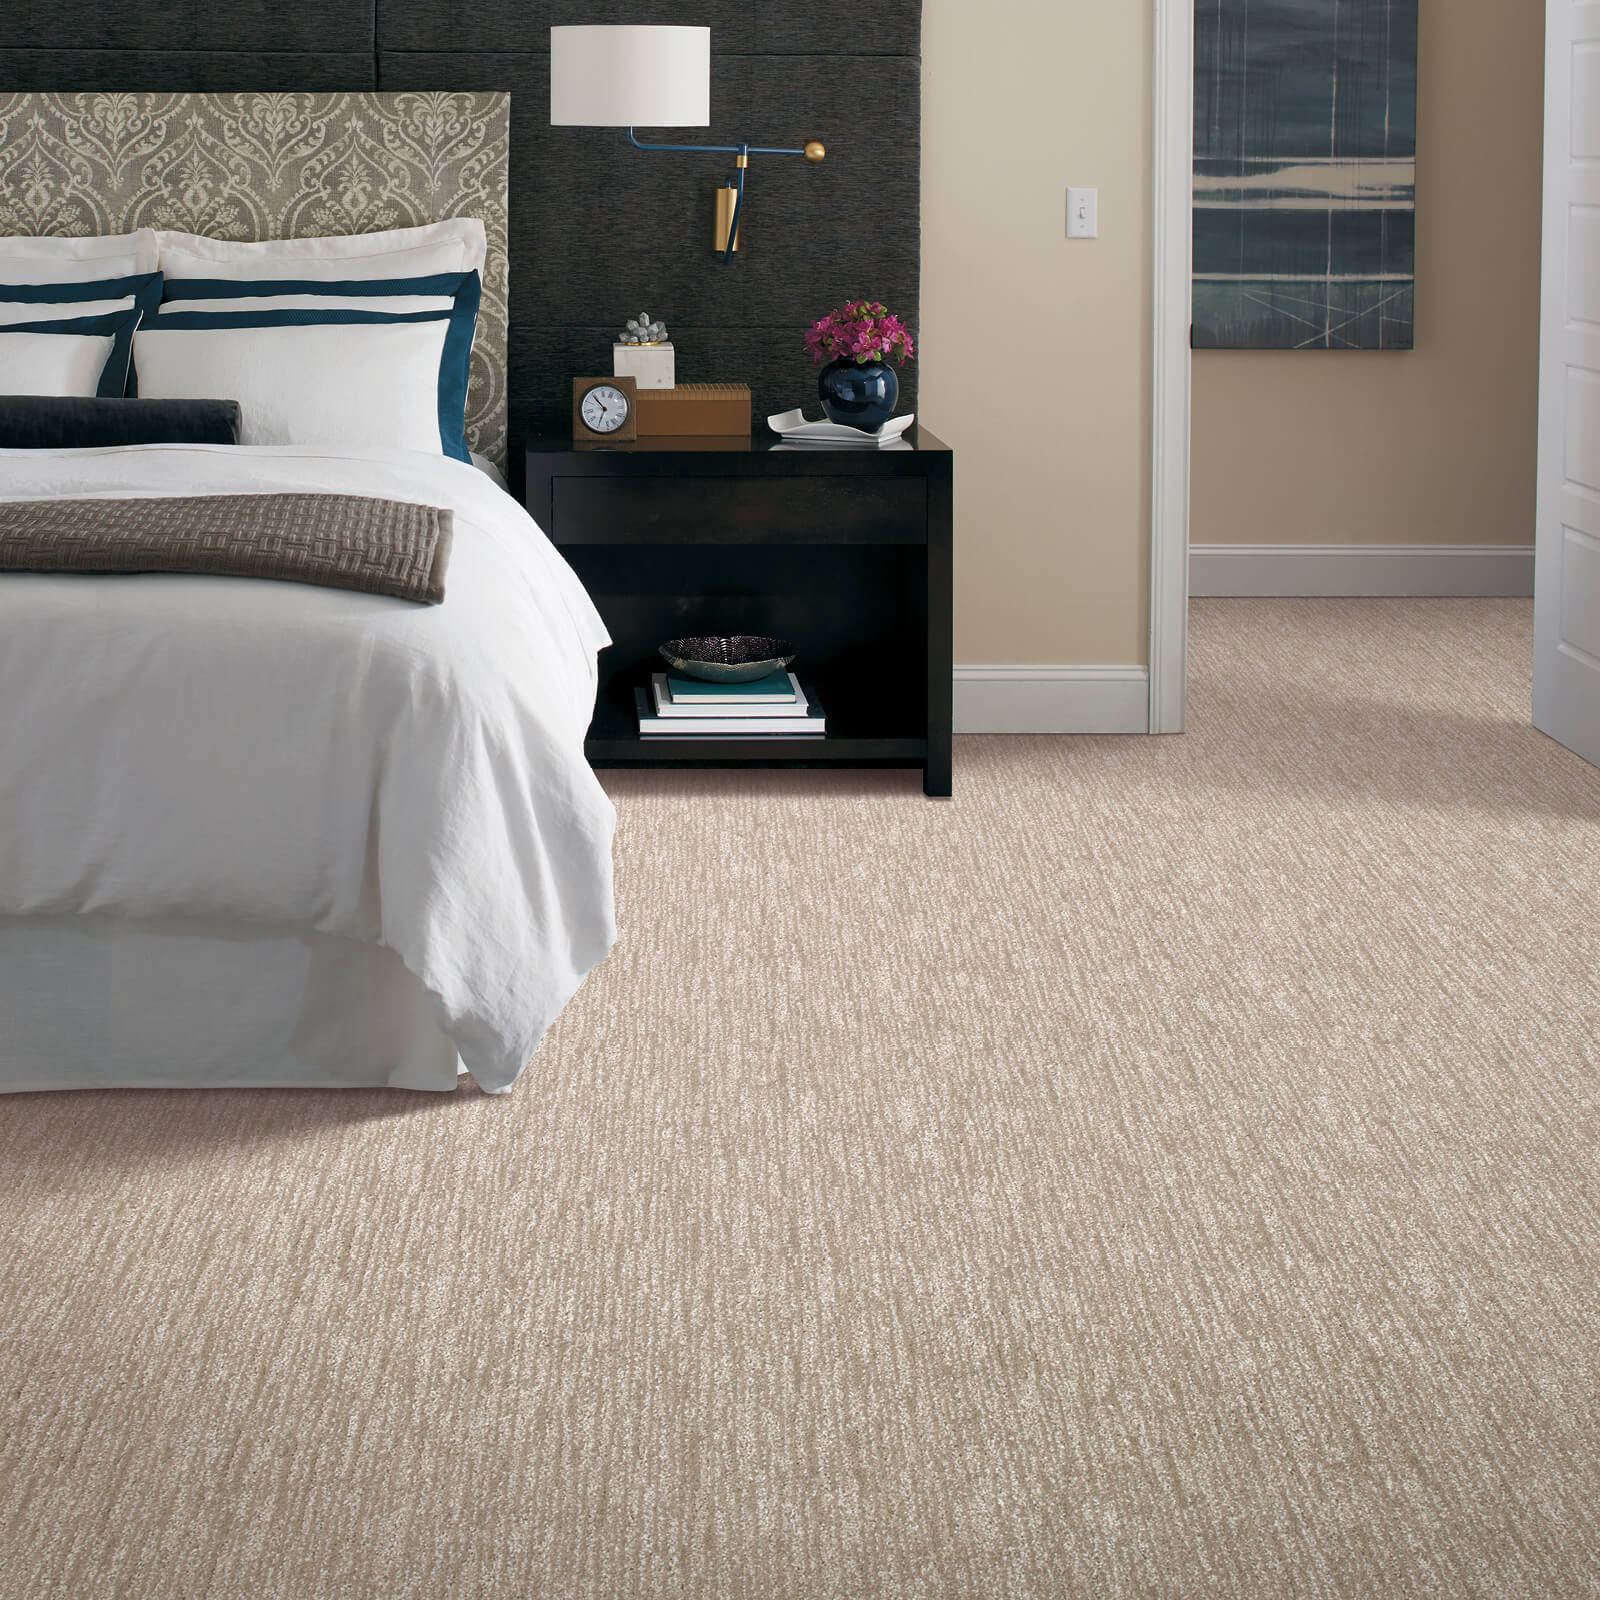 Carpeting in Bedroom | Haley's Flooring & Interiors